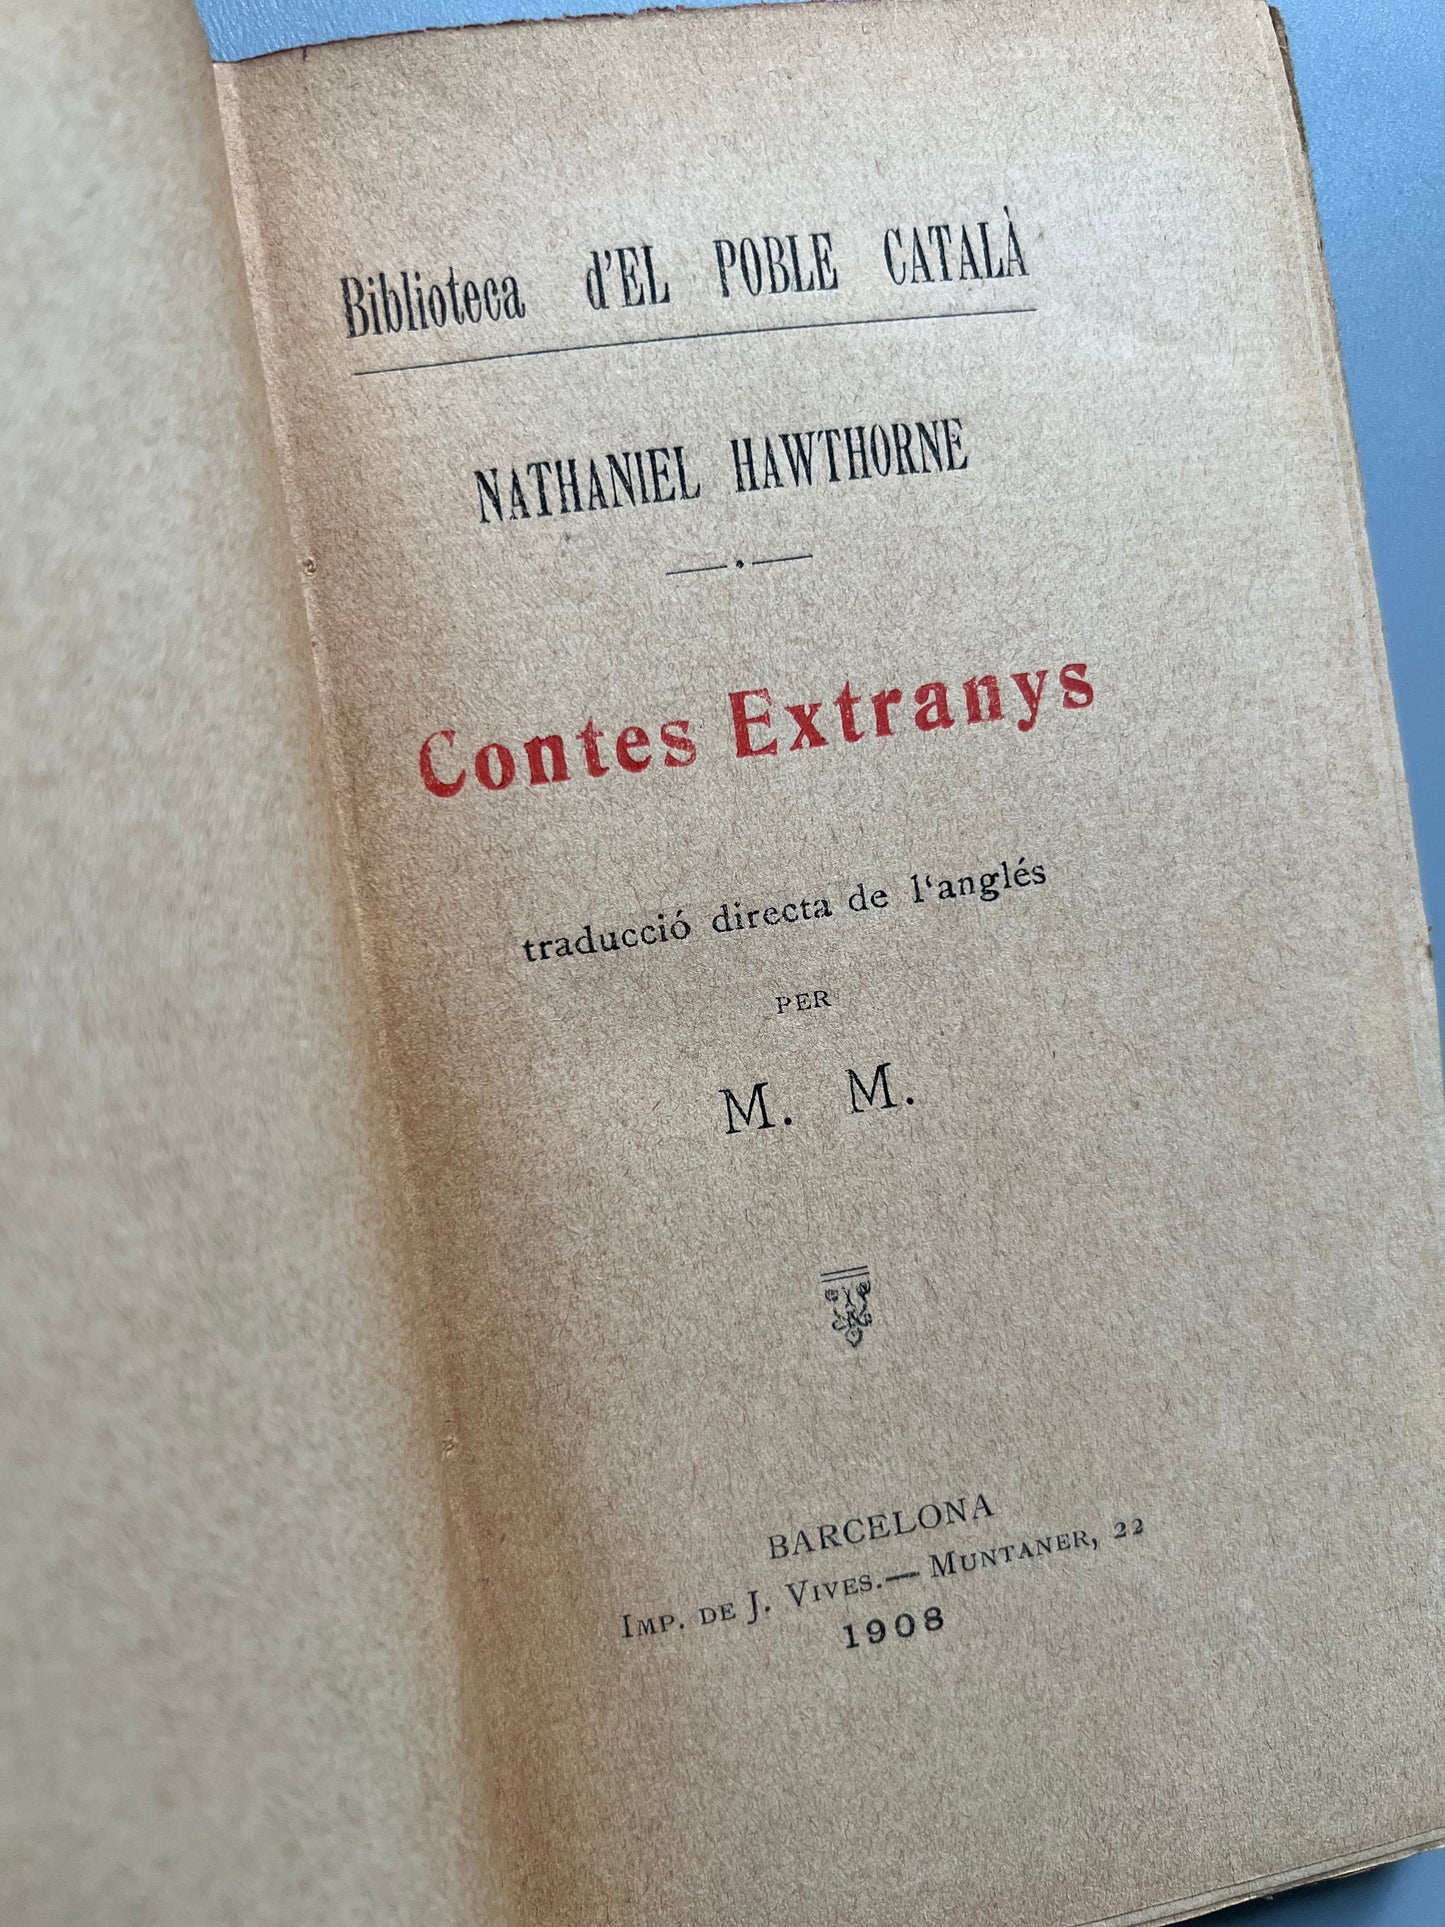 Contes extranys, Nathaniel Hawthorne - Biblioteca d'El poble català, 1908